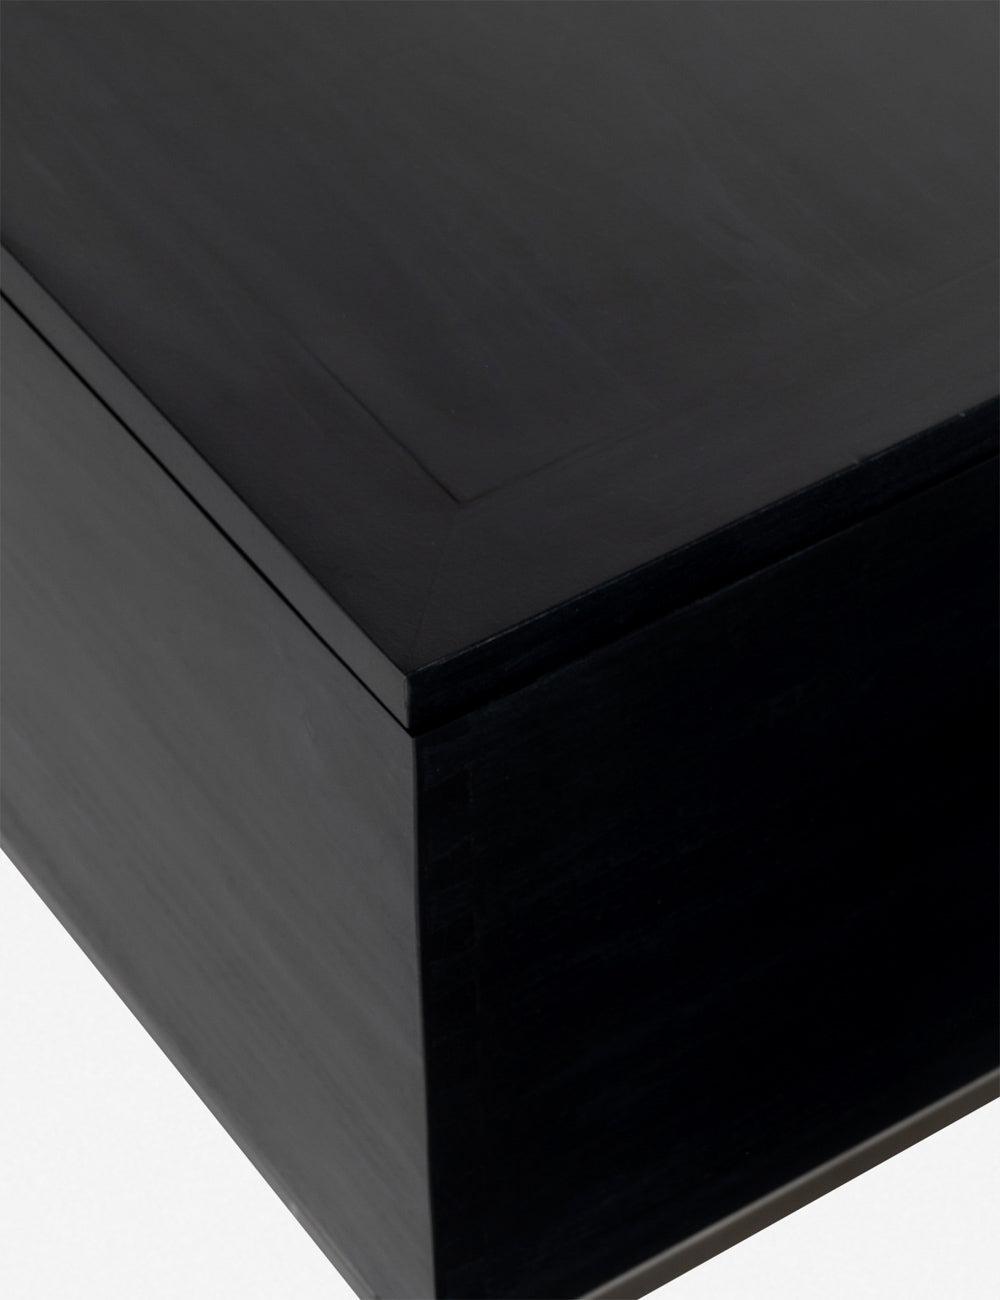 Modern Black Poplar Wood 58" Storage Bench with Leather Pulls